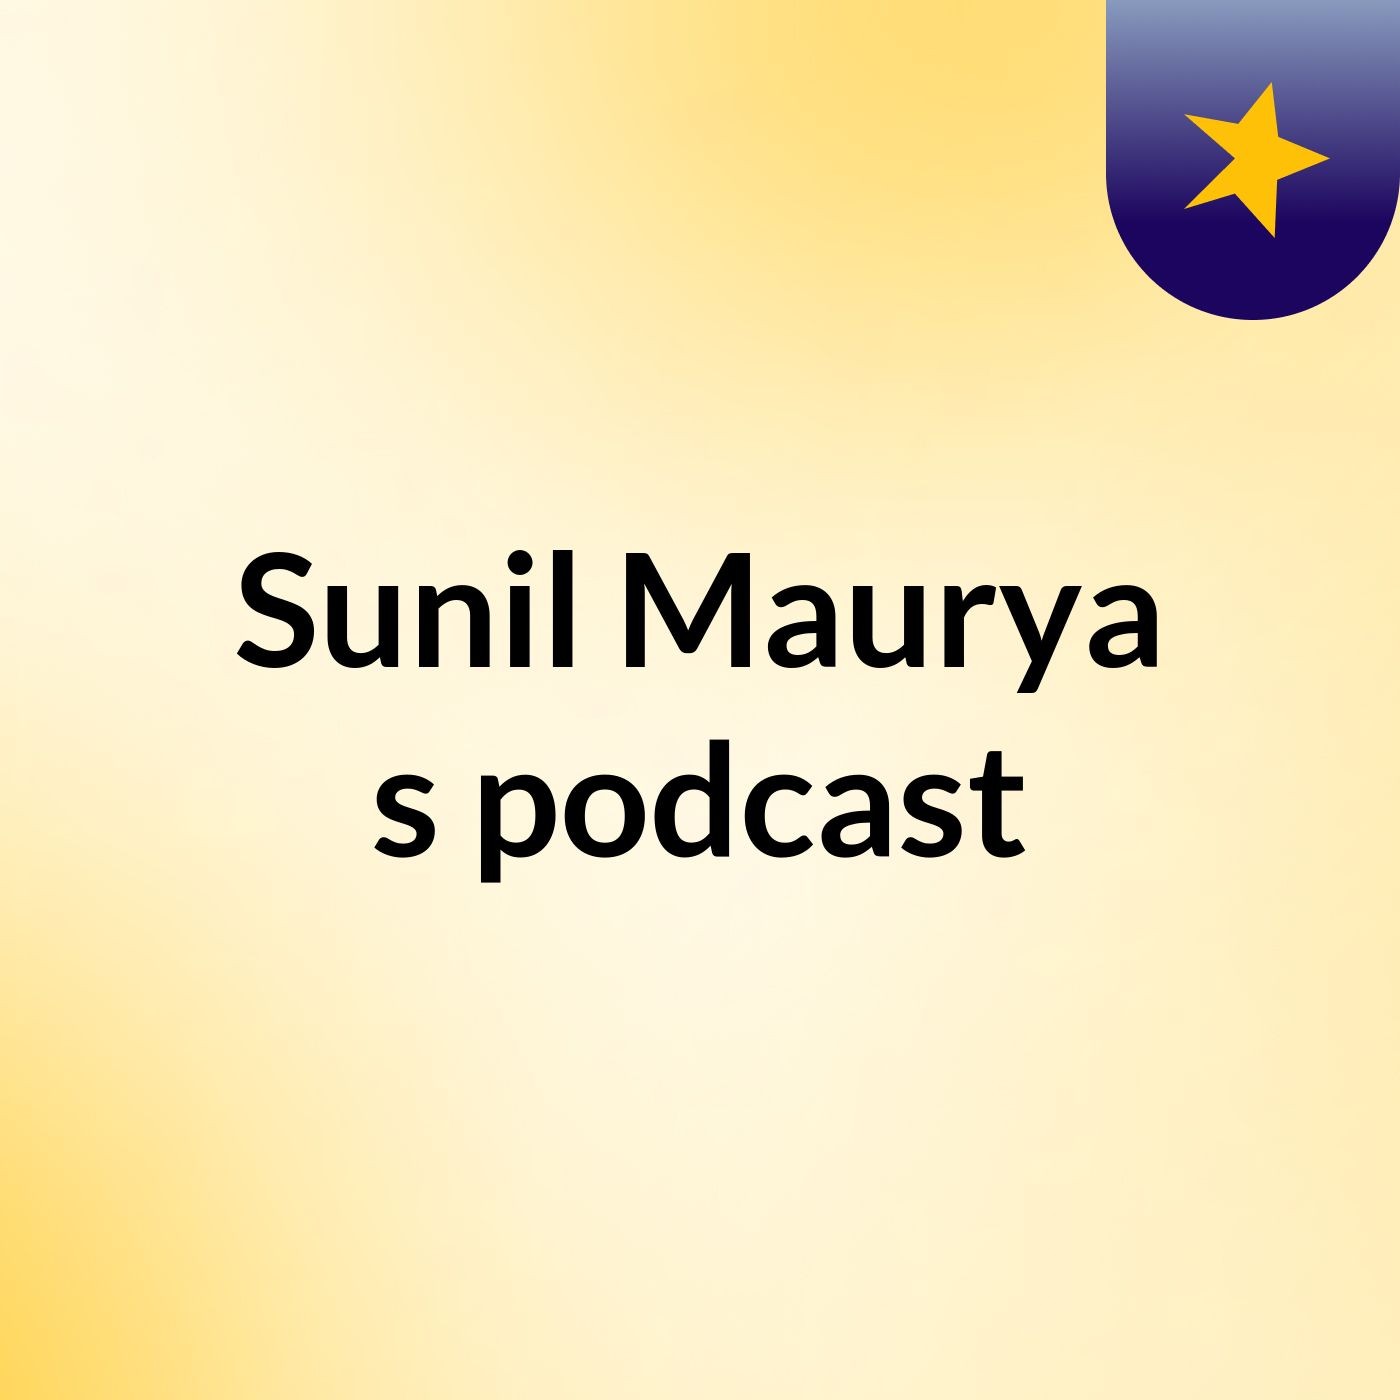 Sunil Maurya's podcast